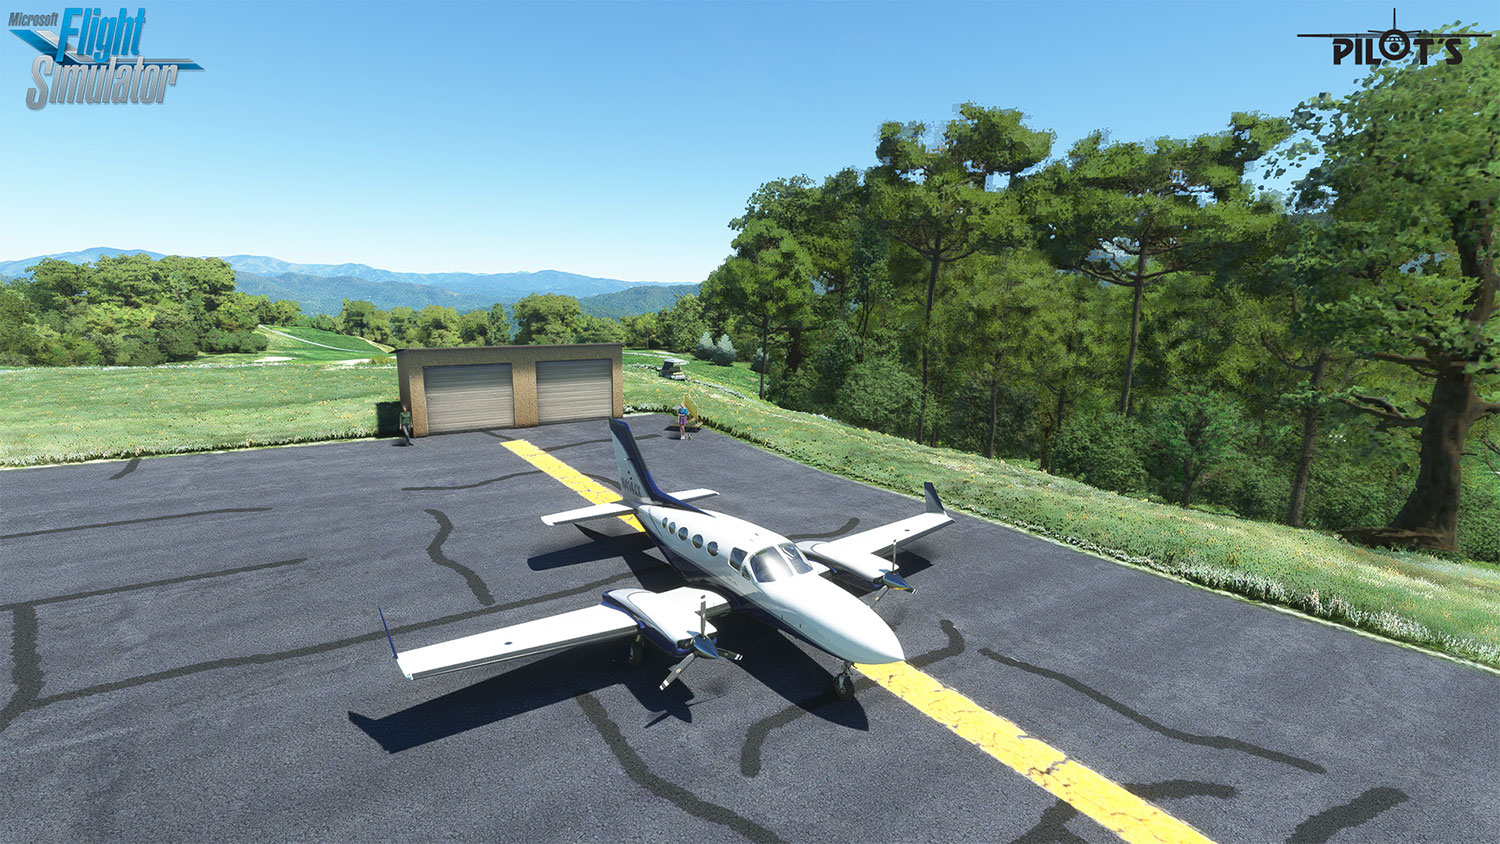 PILOT'S - 2NC0 - Mountain Air Airport MSFS